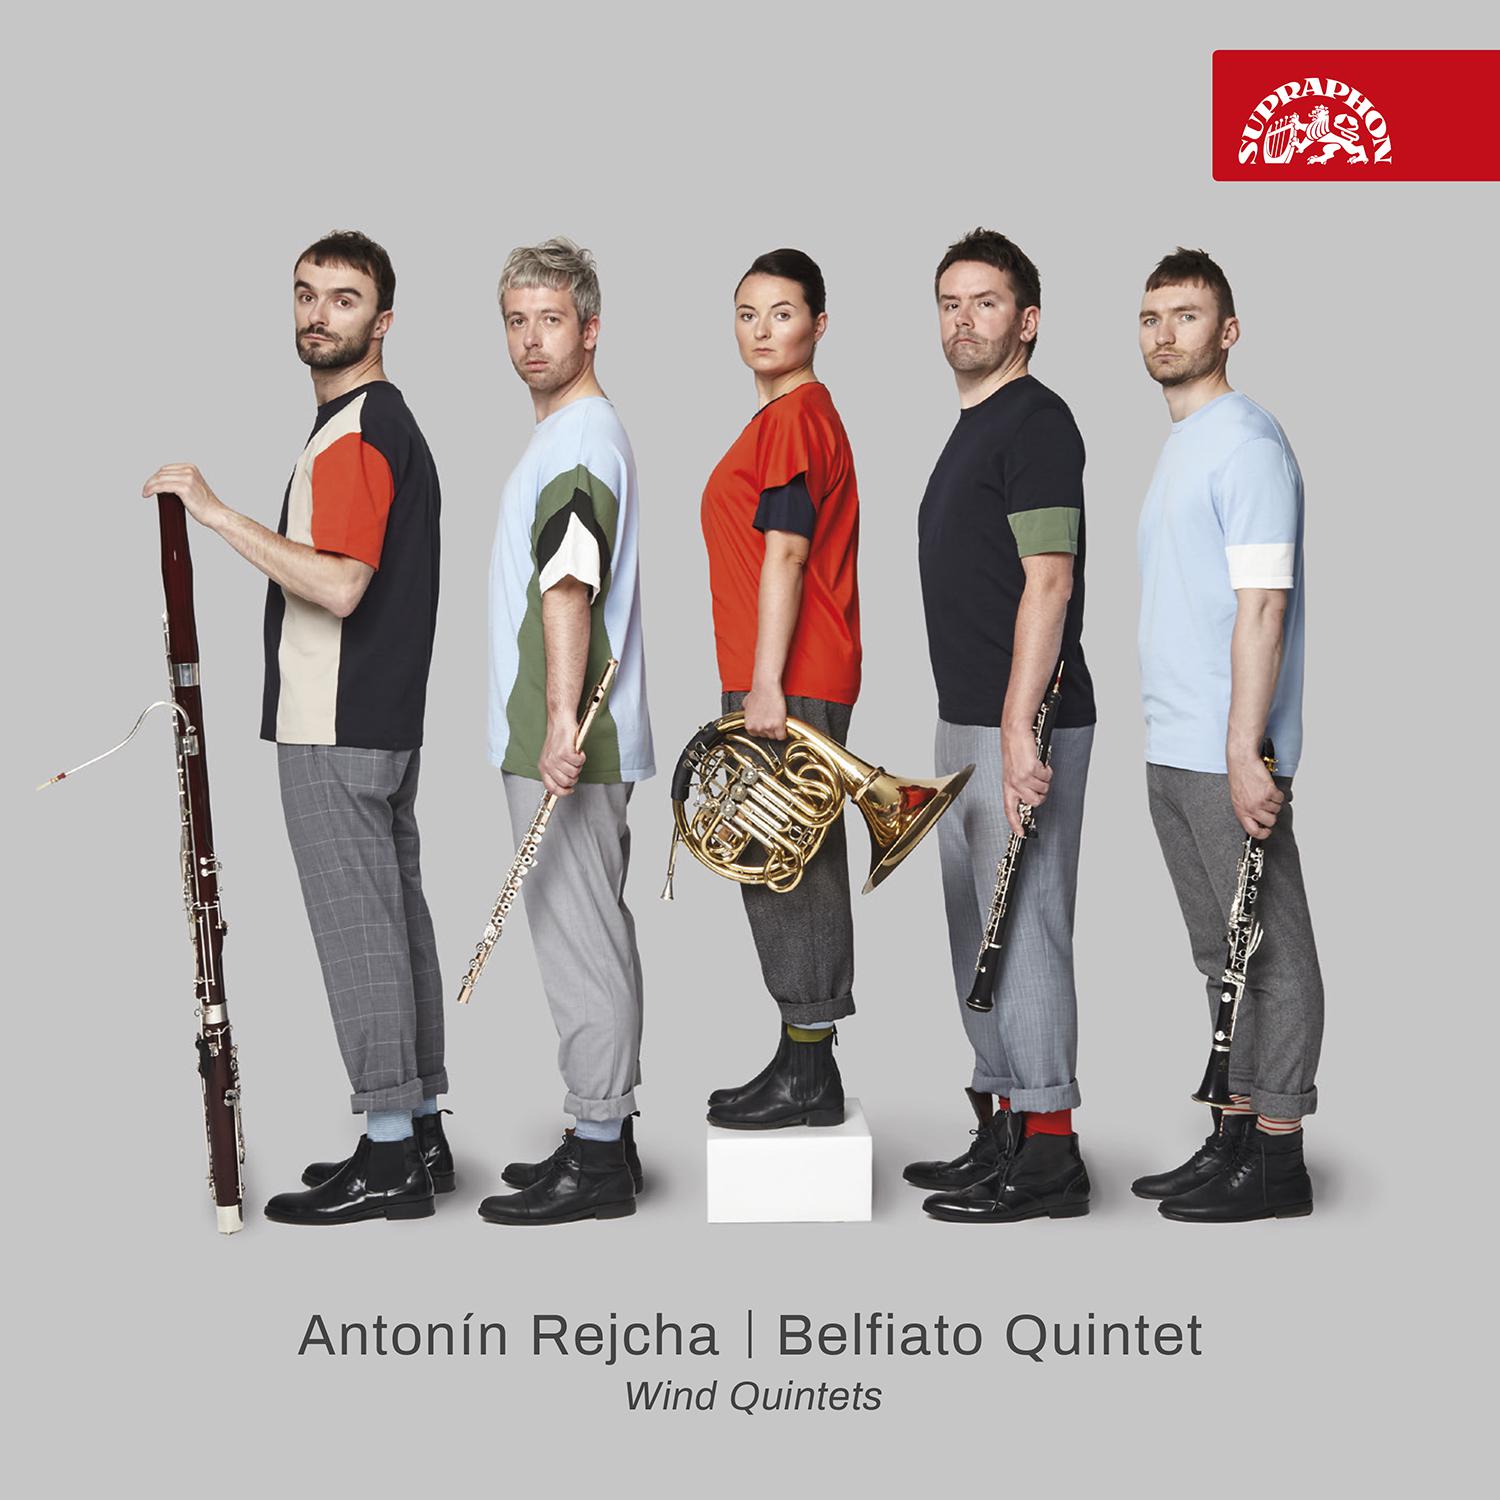 Belfiato Quintet - Wind Quintet in D Major, Op. 91 No. 3:No. 1, Lento - Allegro assai